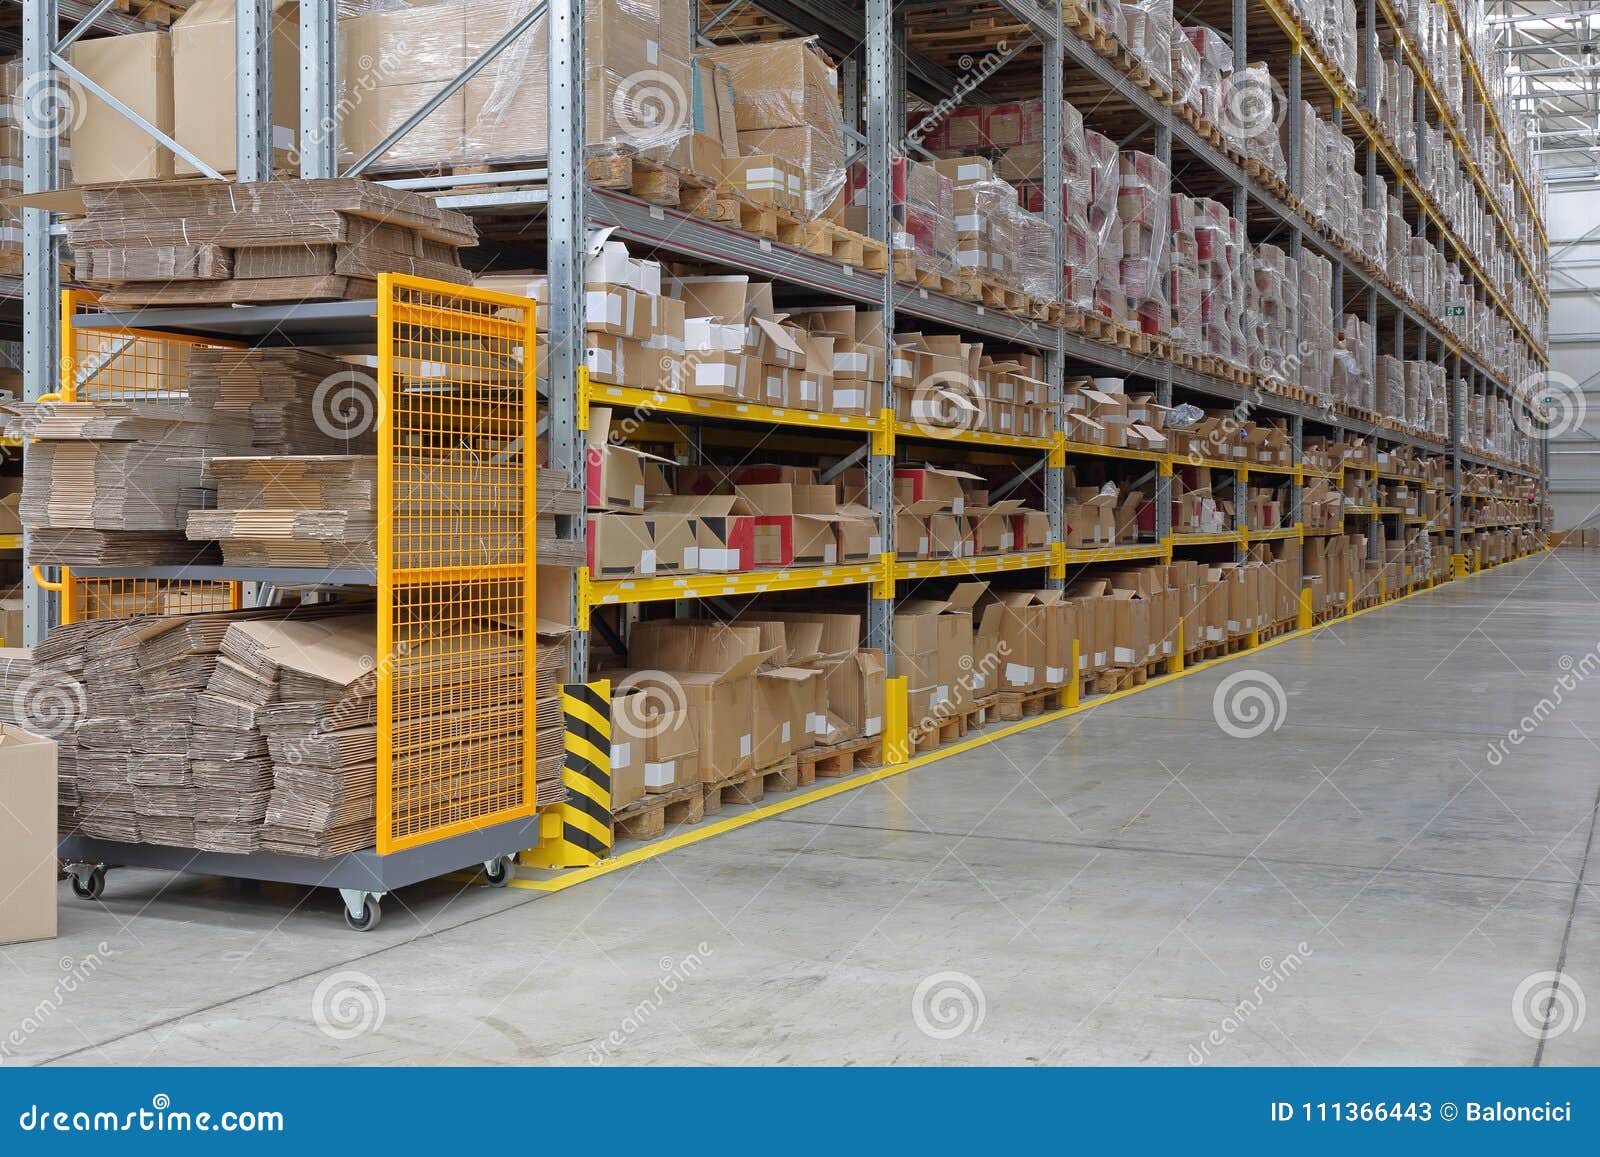 shelving system warehouse